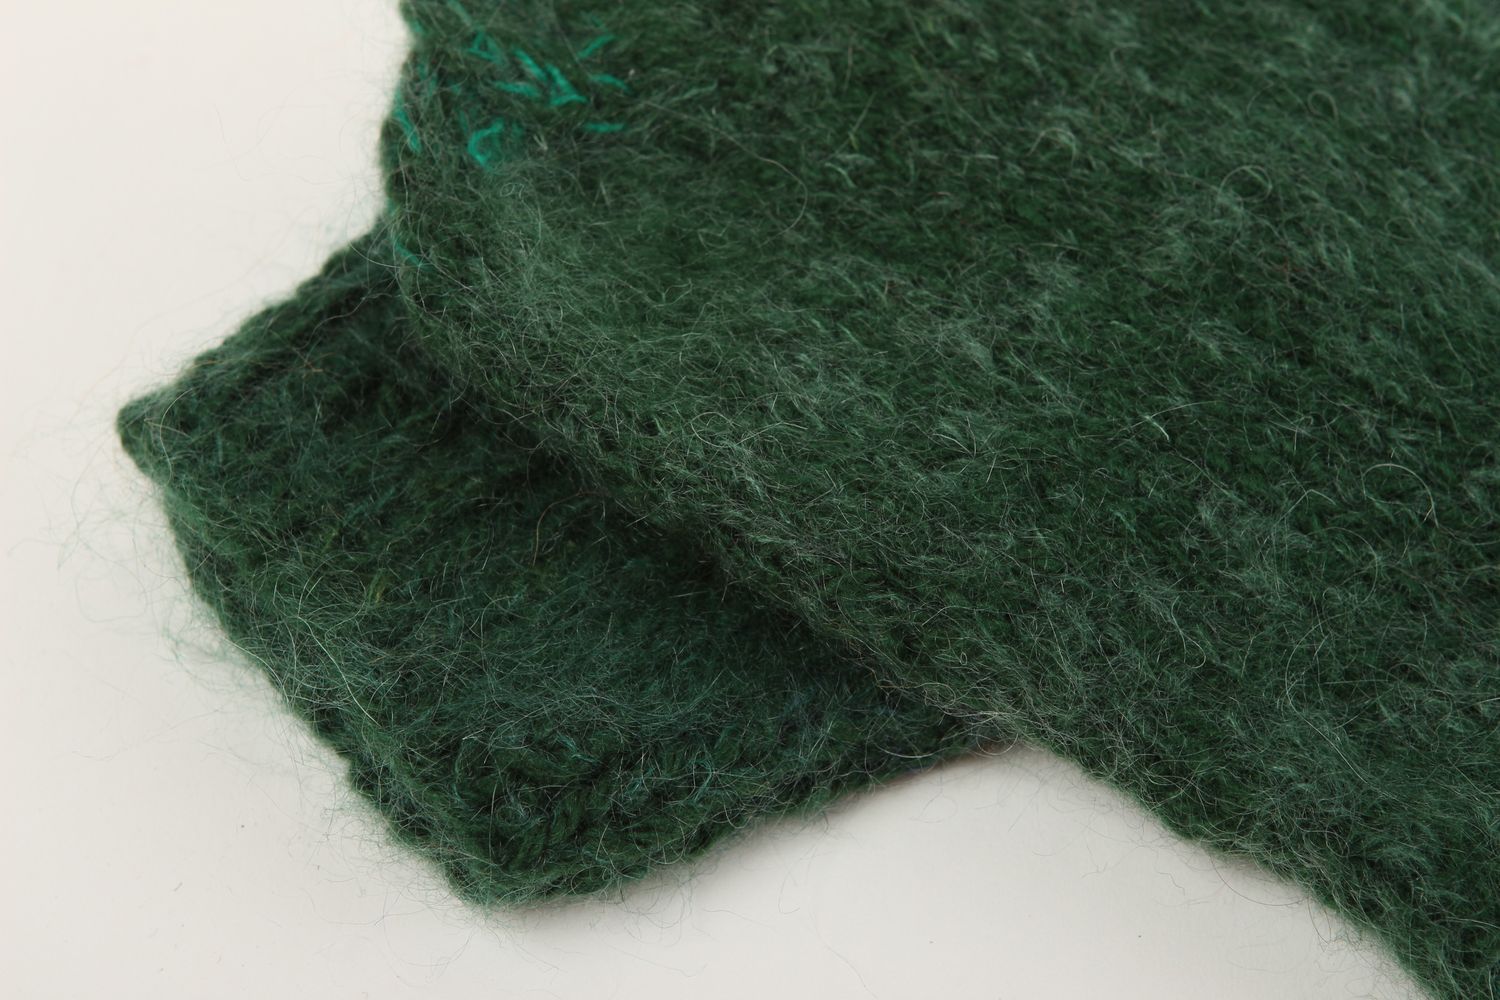 Handmade green woolen socks knitted socks winter clothes Christmas gift ideas photo 4